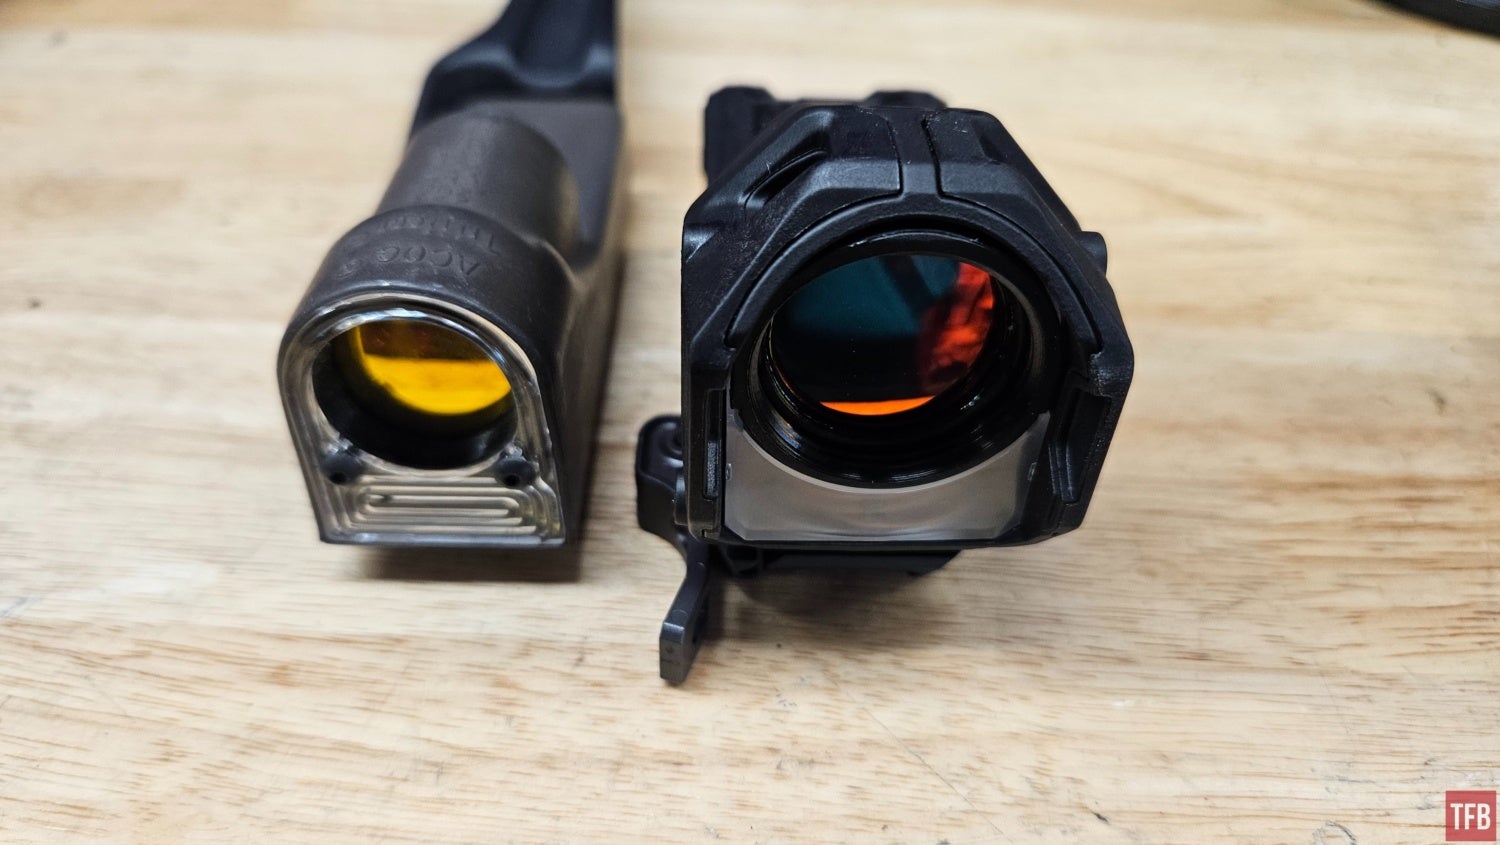 TFB Review: Meprolight M22 Self-Illuminated Reflex Sight